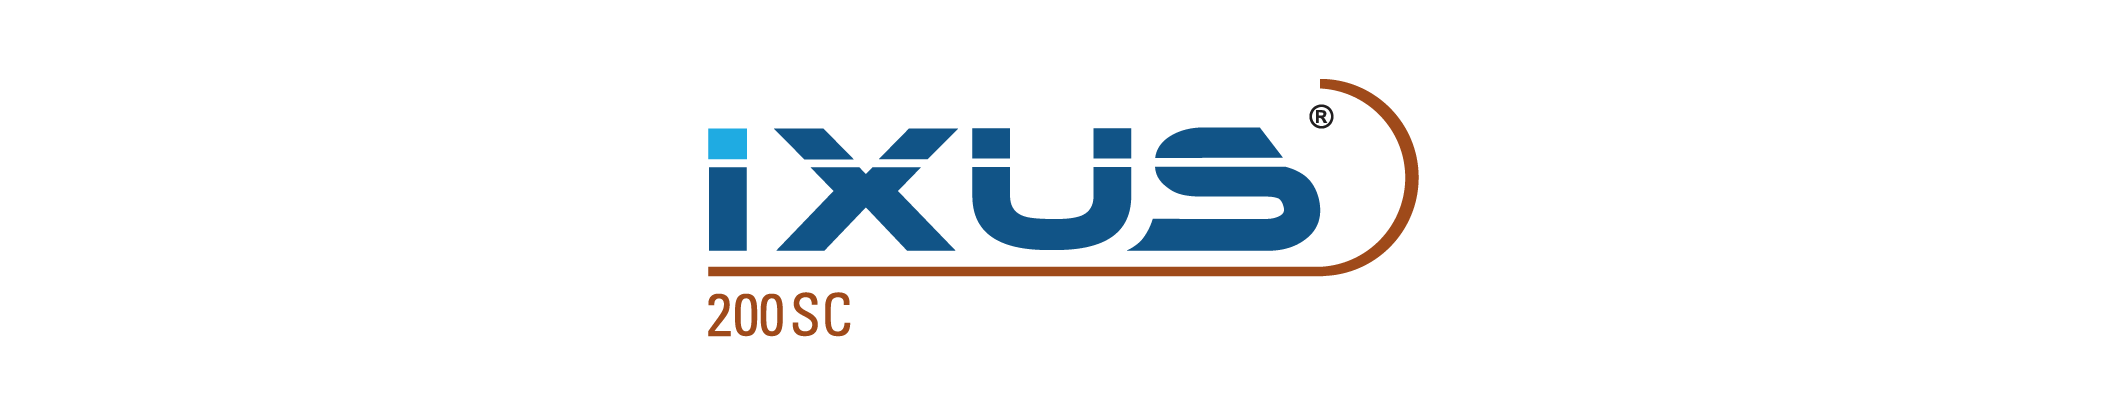 Ixus